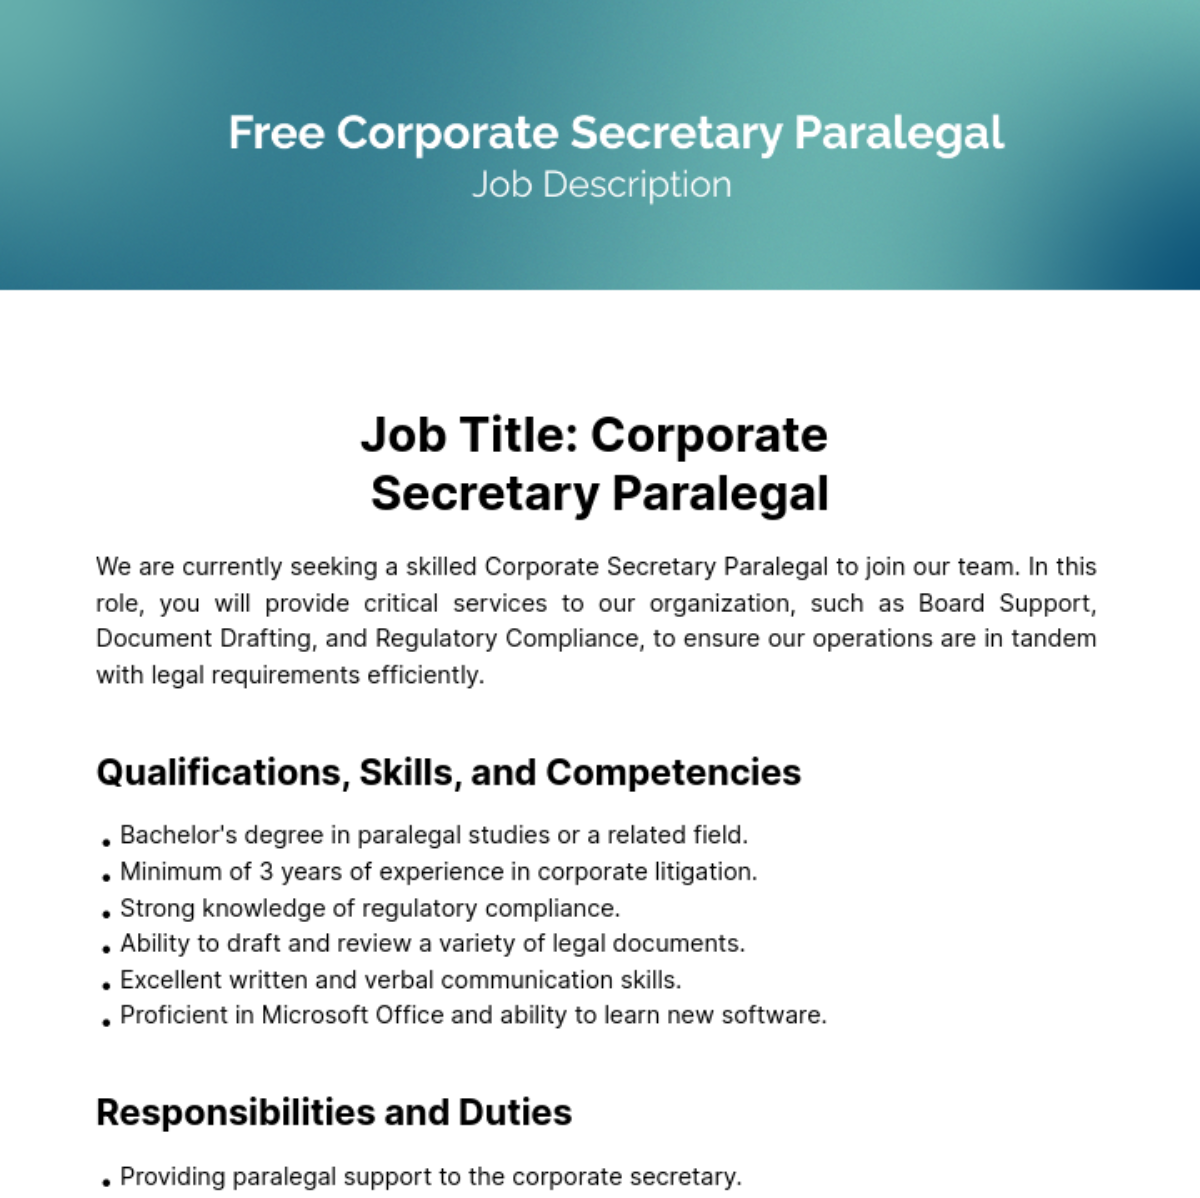 Free Corporate Secretary Paralegal Job Description Template